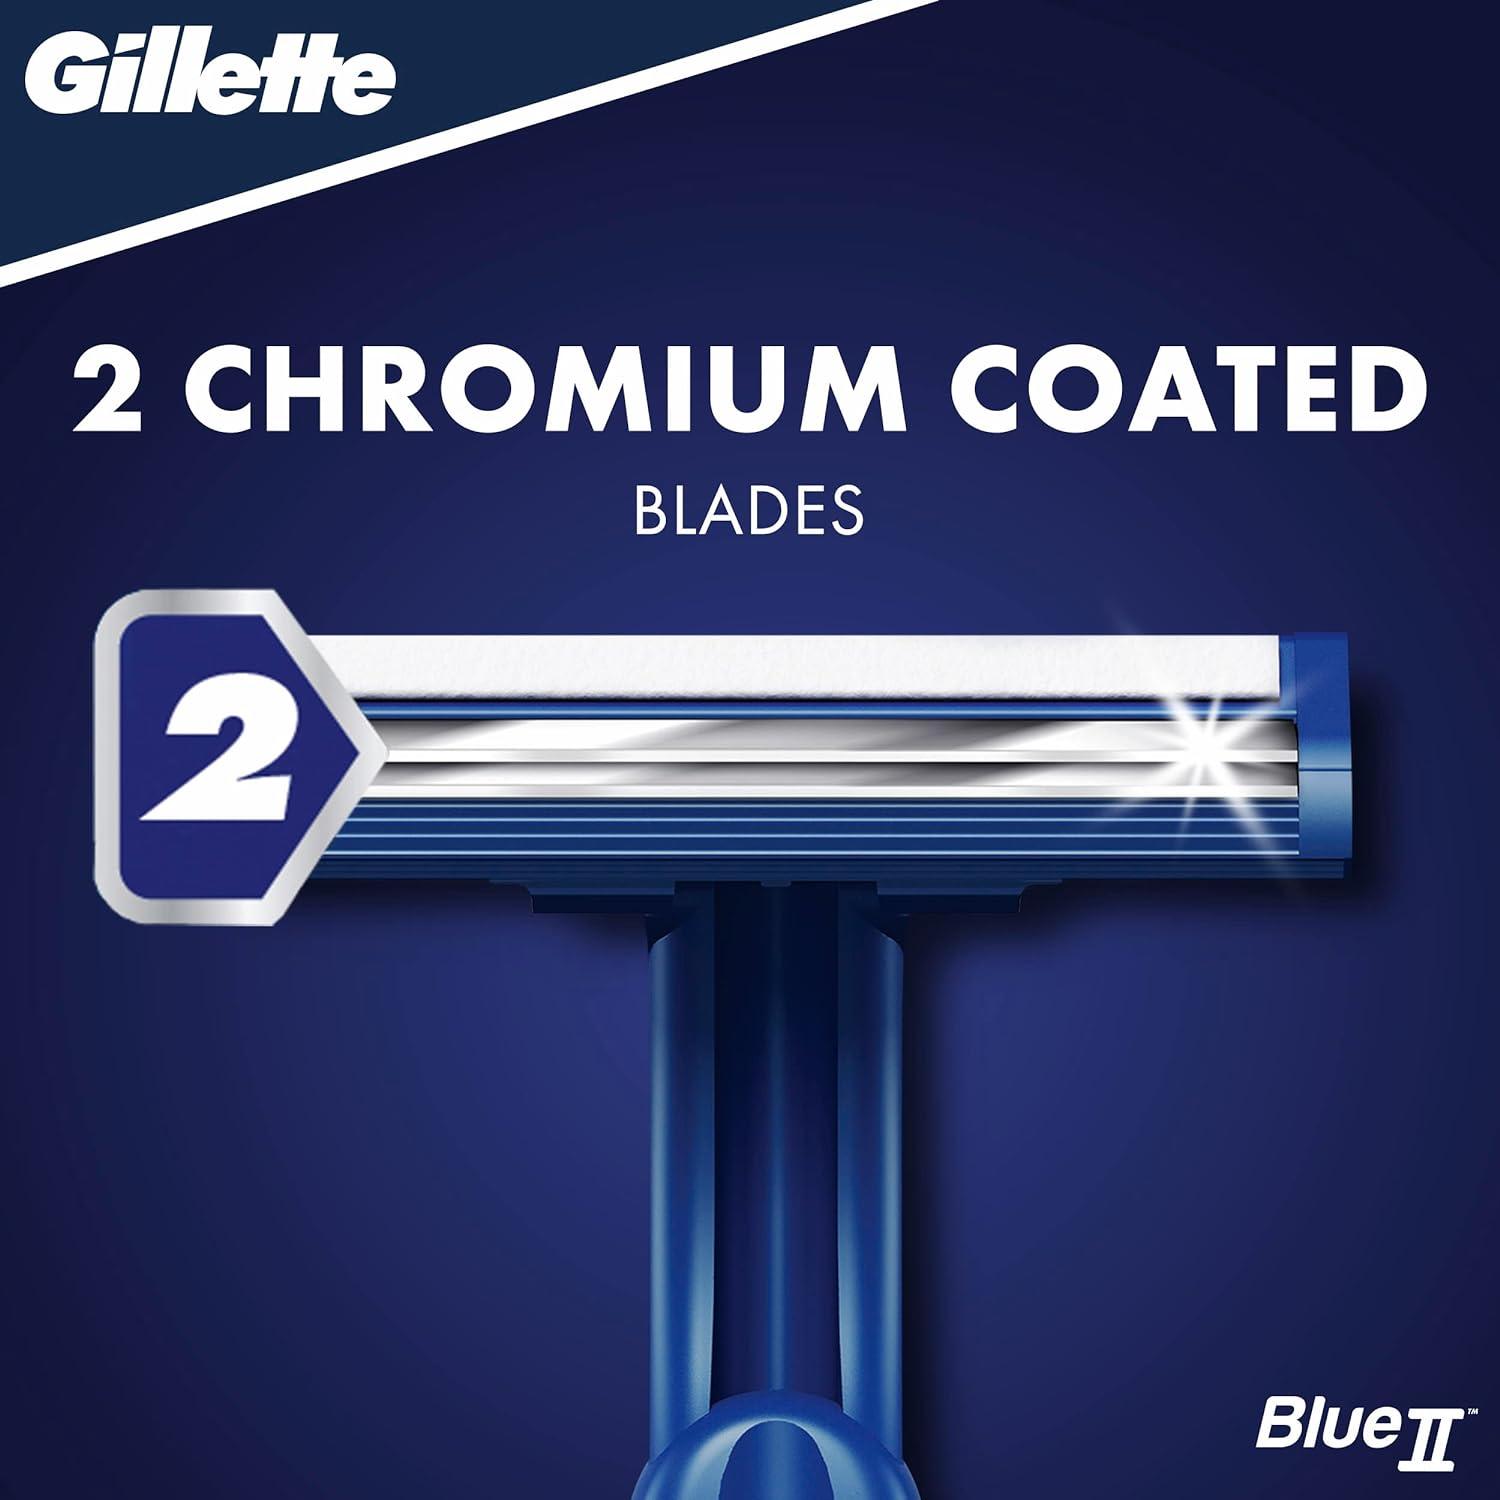 Gillette Blue II Plus Men's Disposable Razors 5 count - Wellness Shoppee